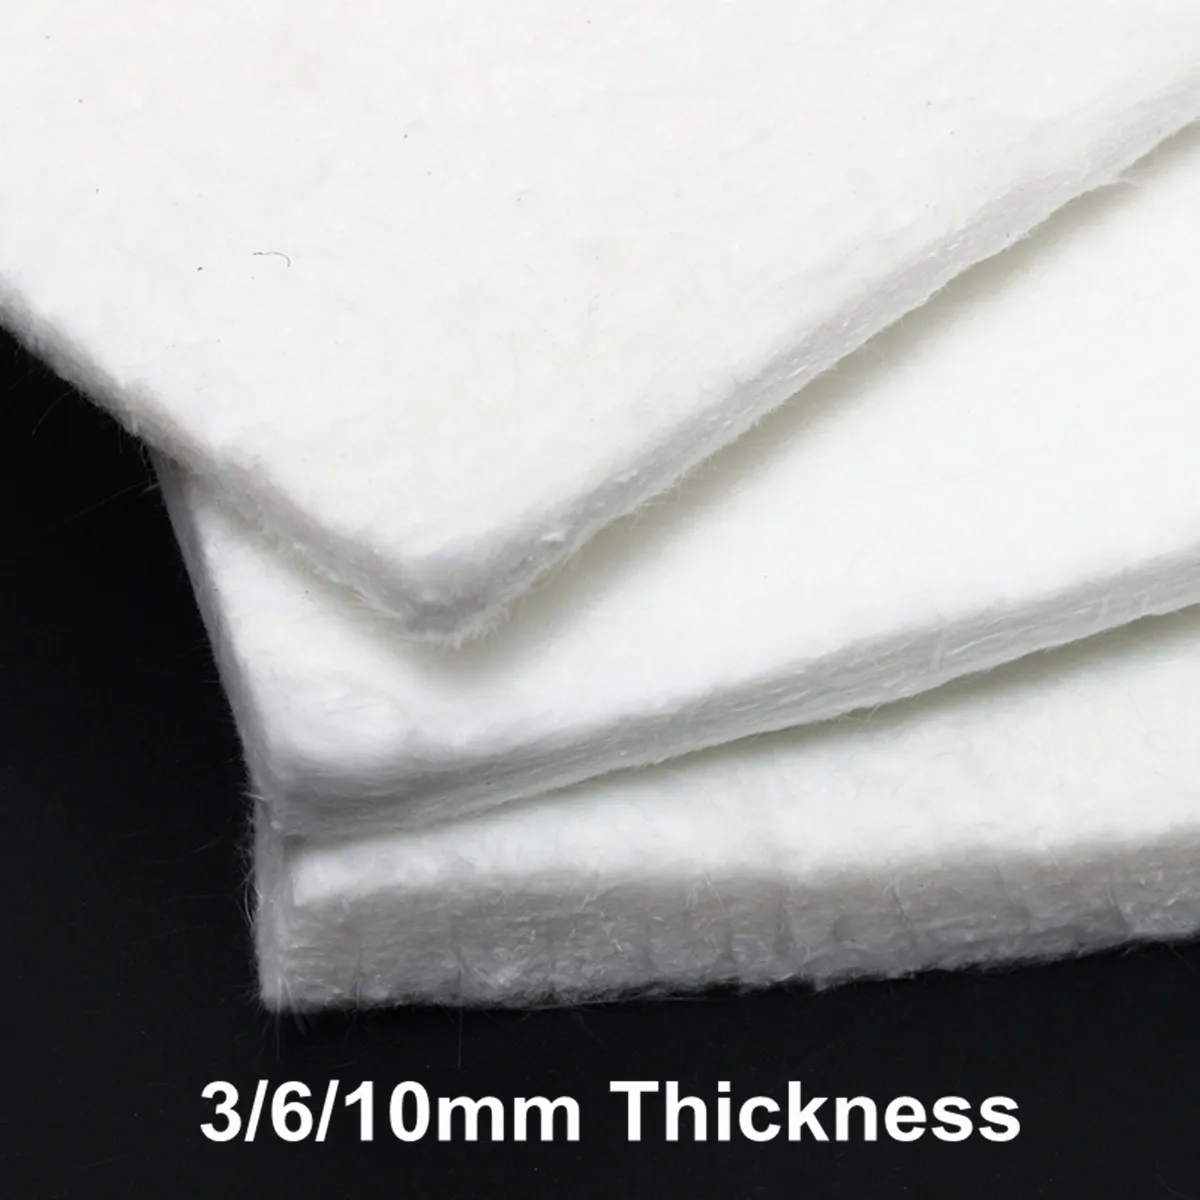 Super Light Silica Aerogel Insulation Hydrophobic Mat Material 3/6/10mm 30x140cm 